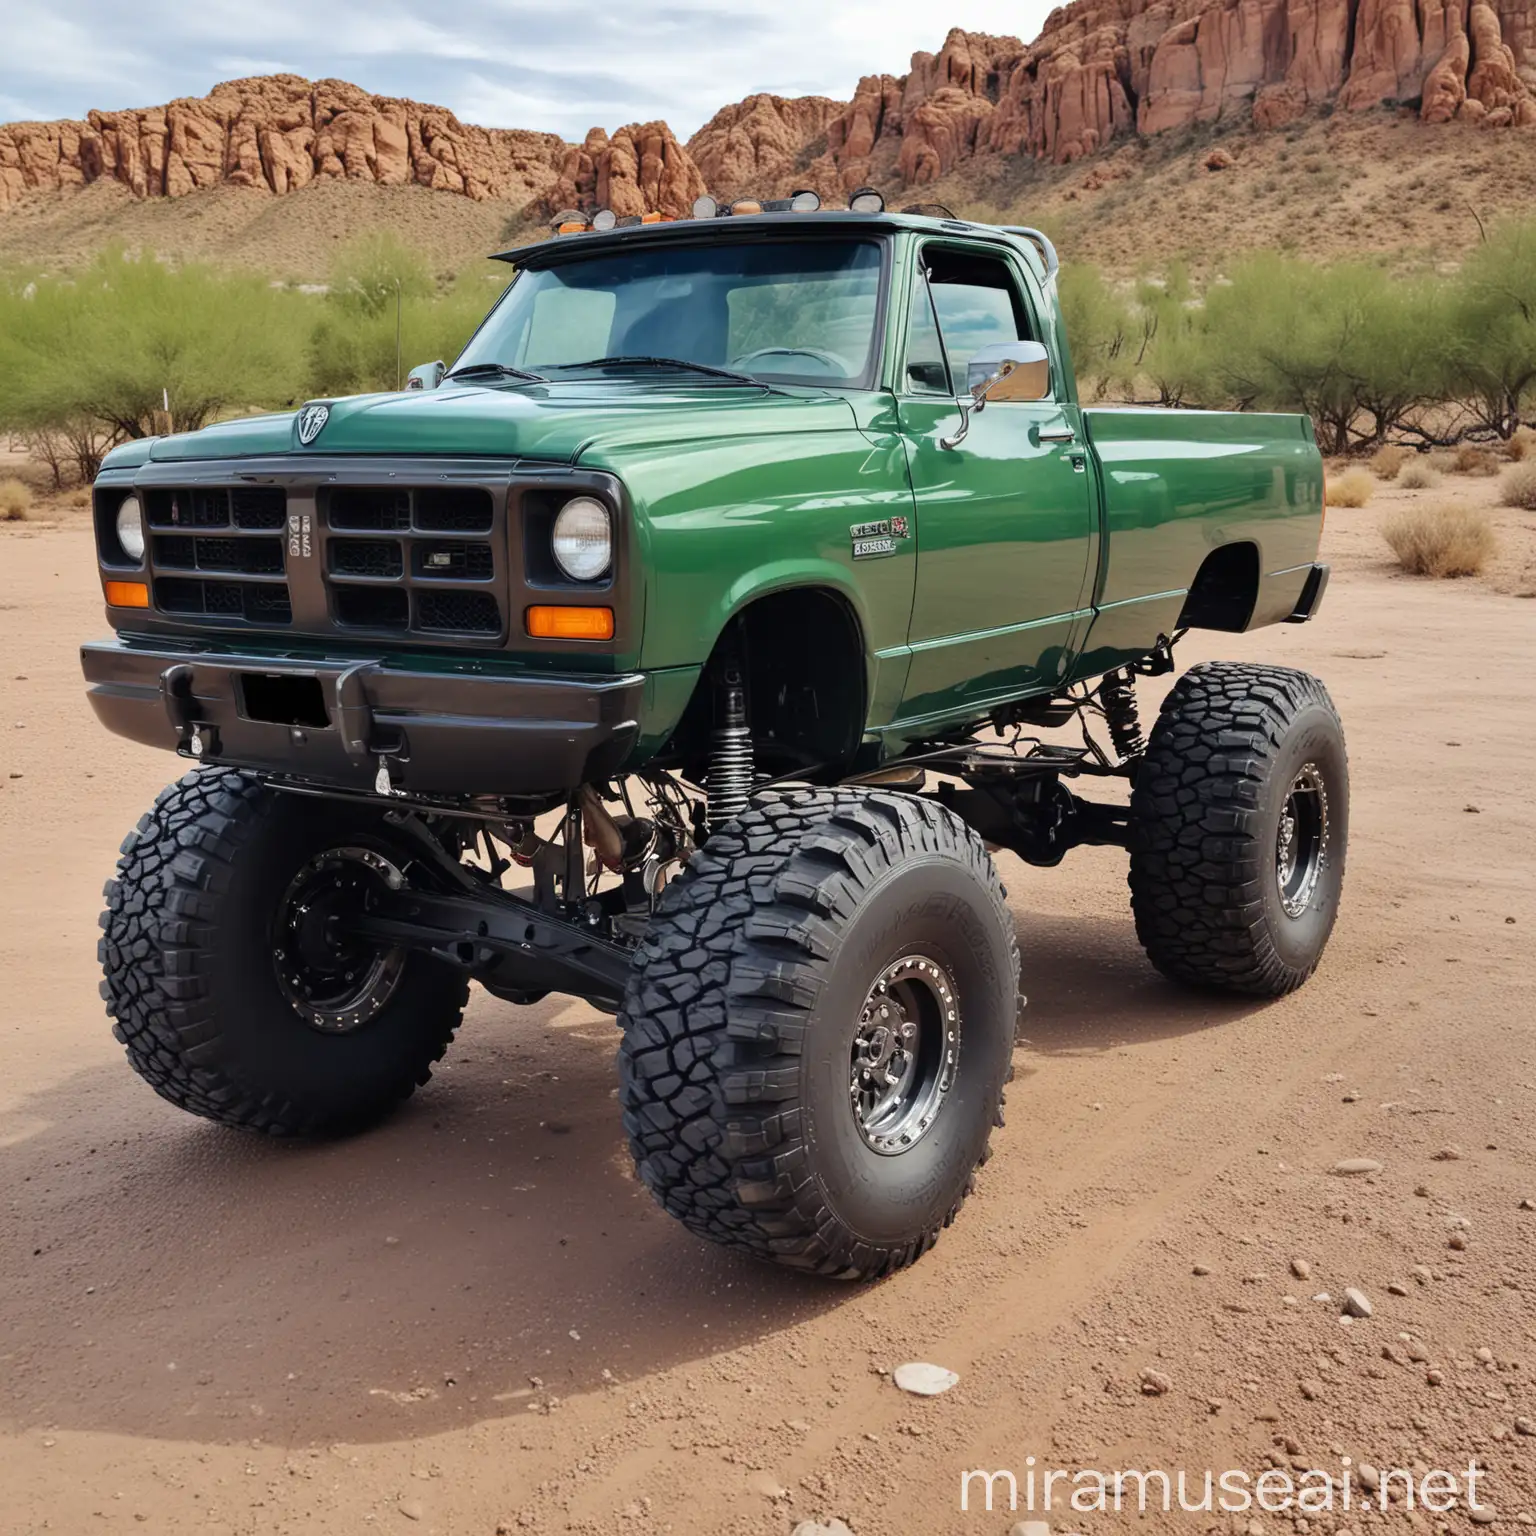 1993 dodge ram w250 green 
club cab 4x4 lifted bigger
 tires in Arizona desert